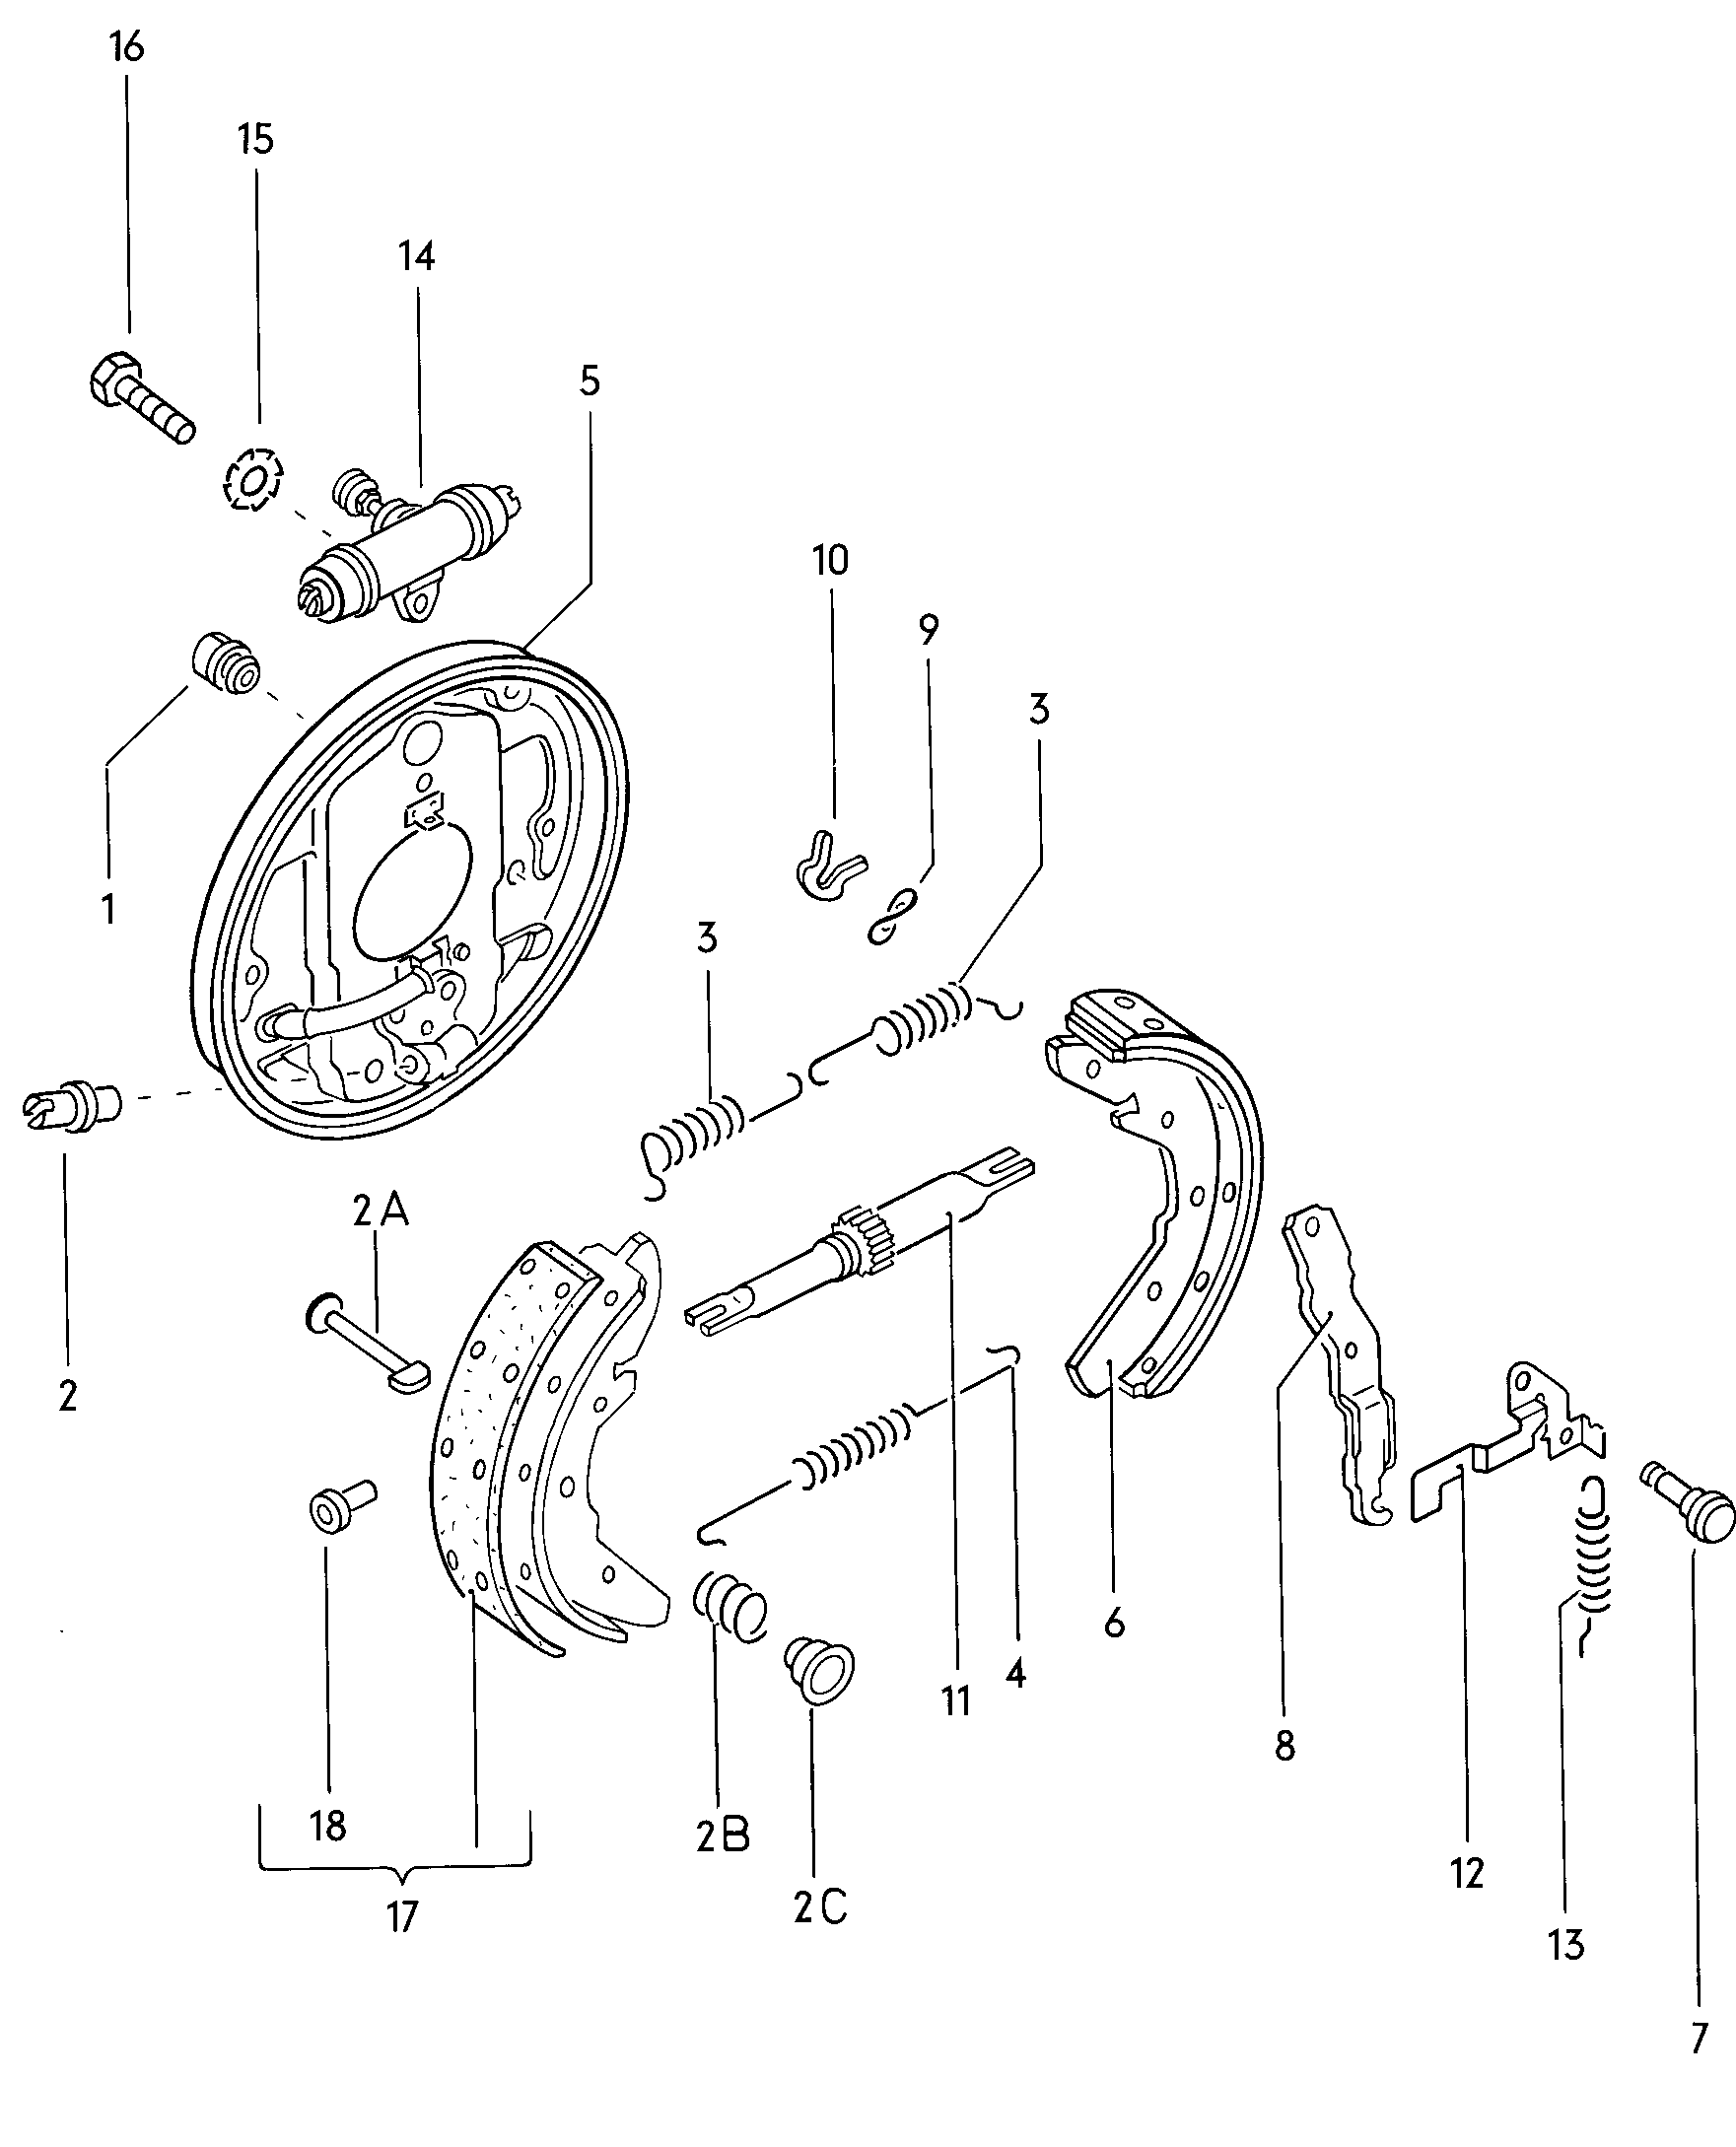 Garniture de freins<br>cylindre recepteur<br> F 214 2000 001>>  - Typ 2/syncro - t2